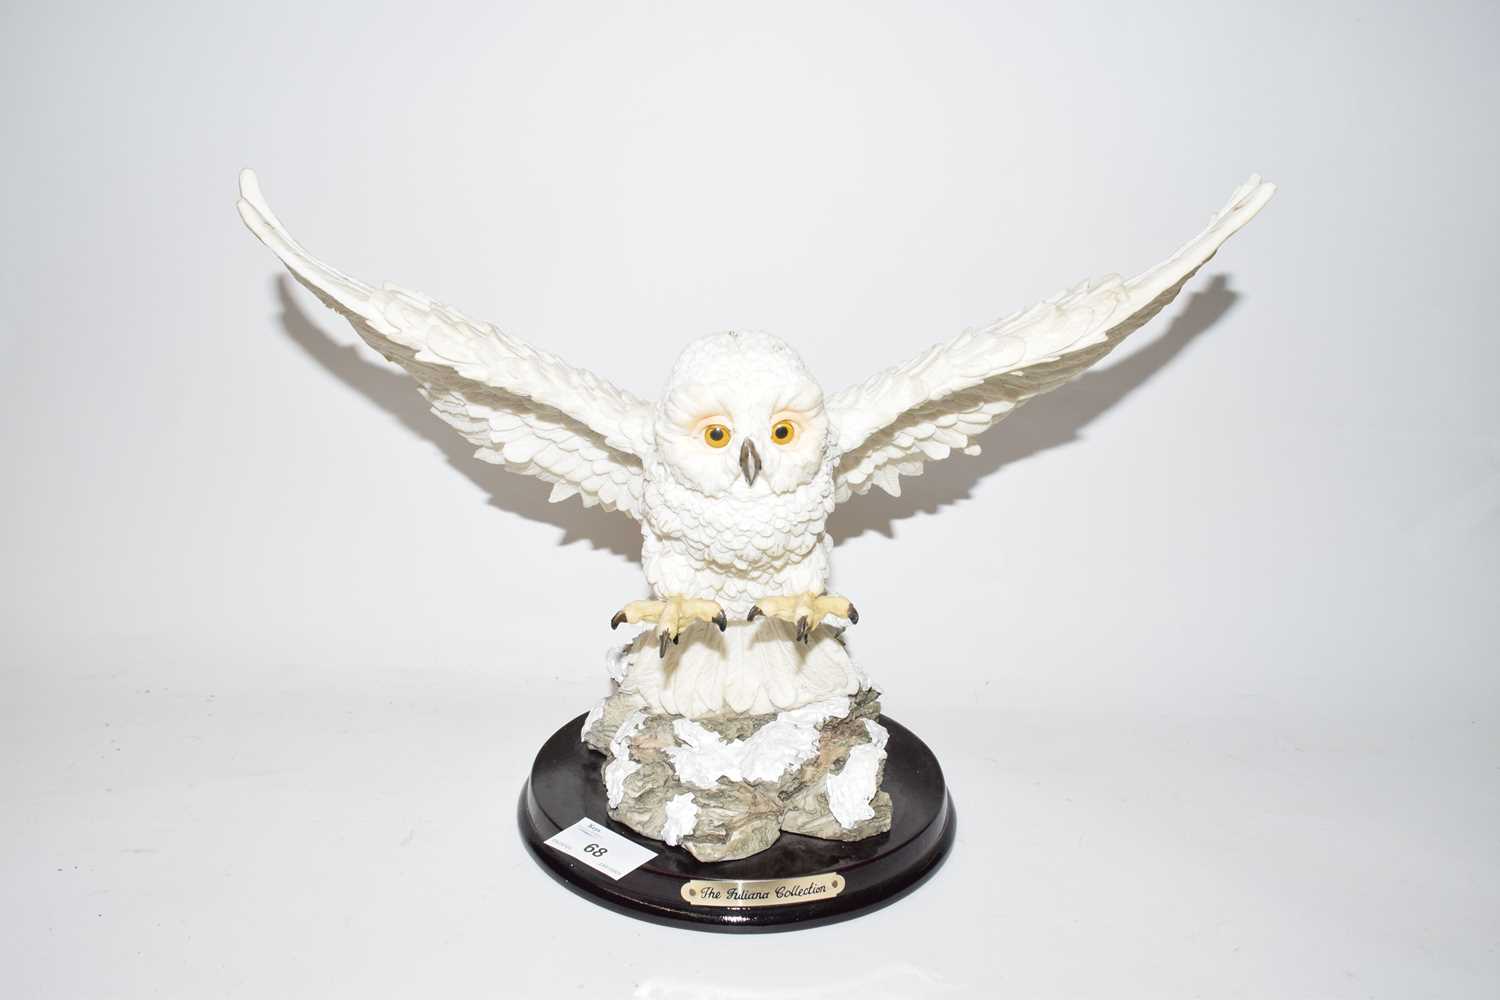 Modern model of a snowy owl